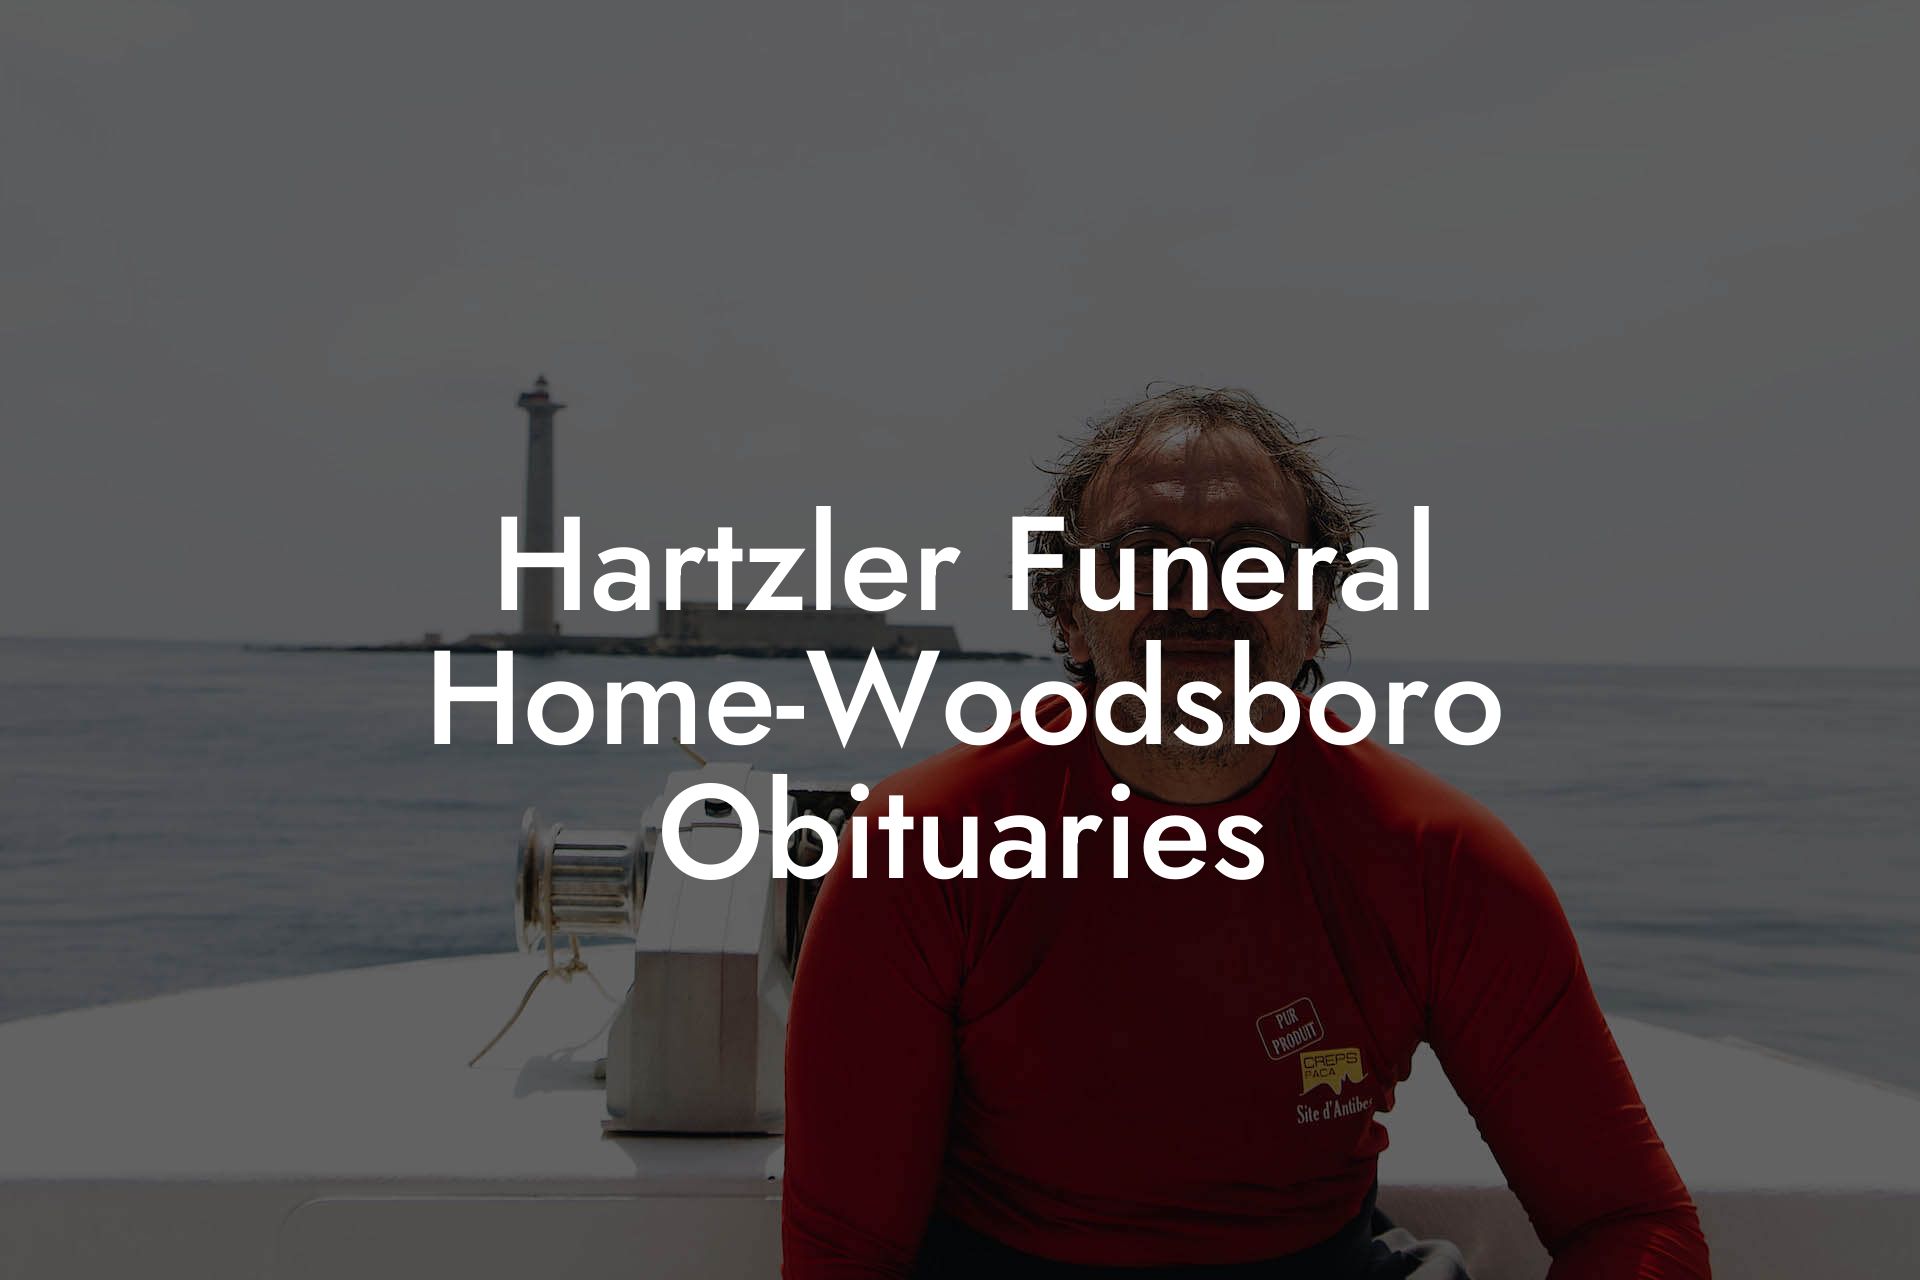 Hartzler Funeral Home-Woodsboro Obituaries